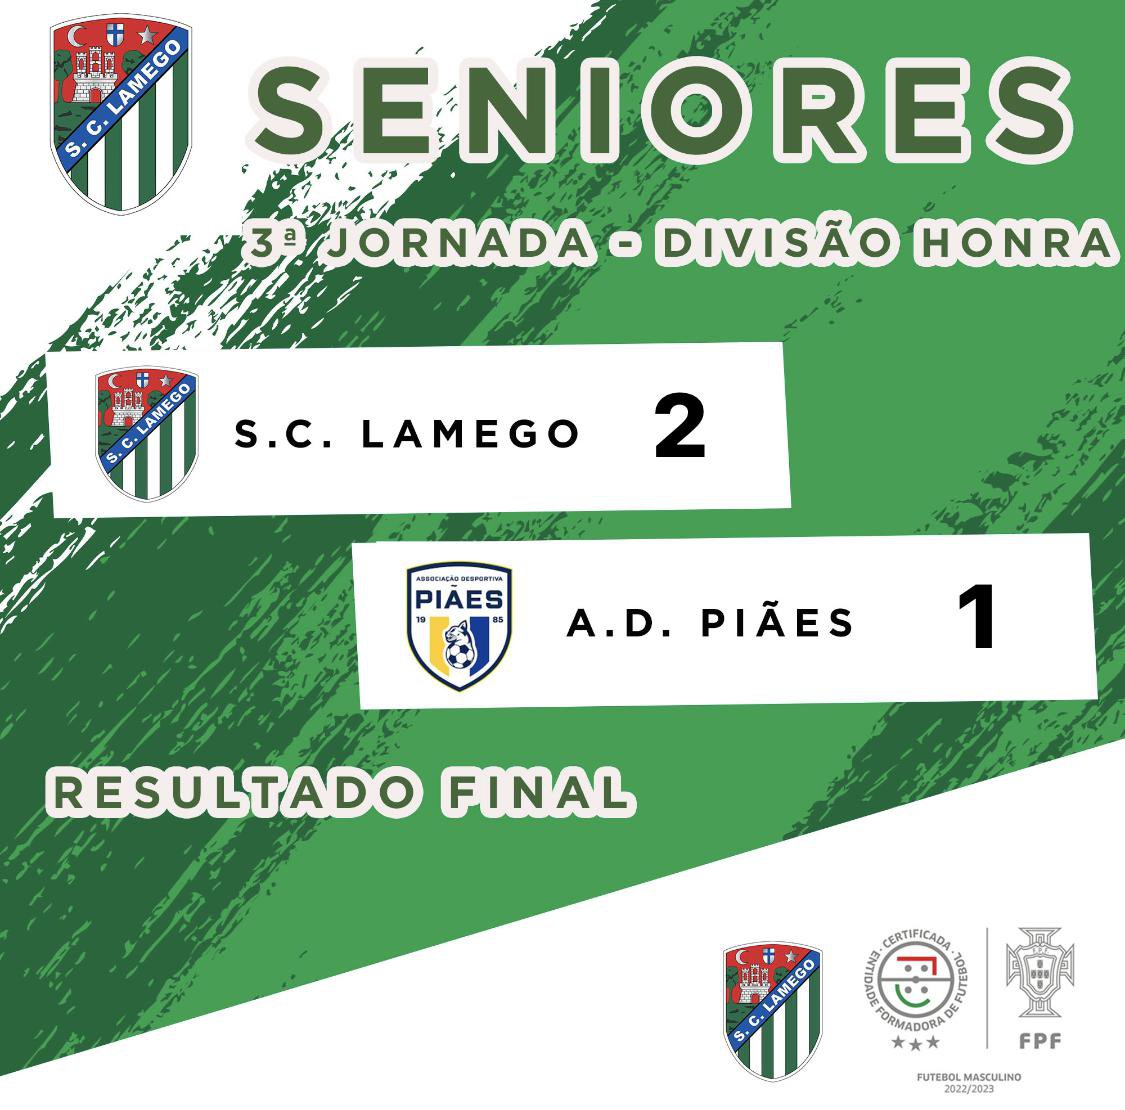 🟢 SC Lamego - Seniores - 3 Jornada ⚪